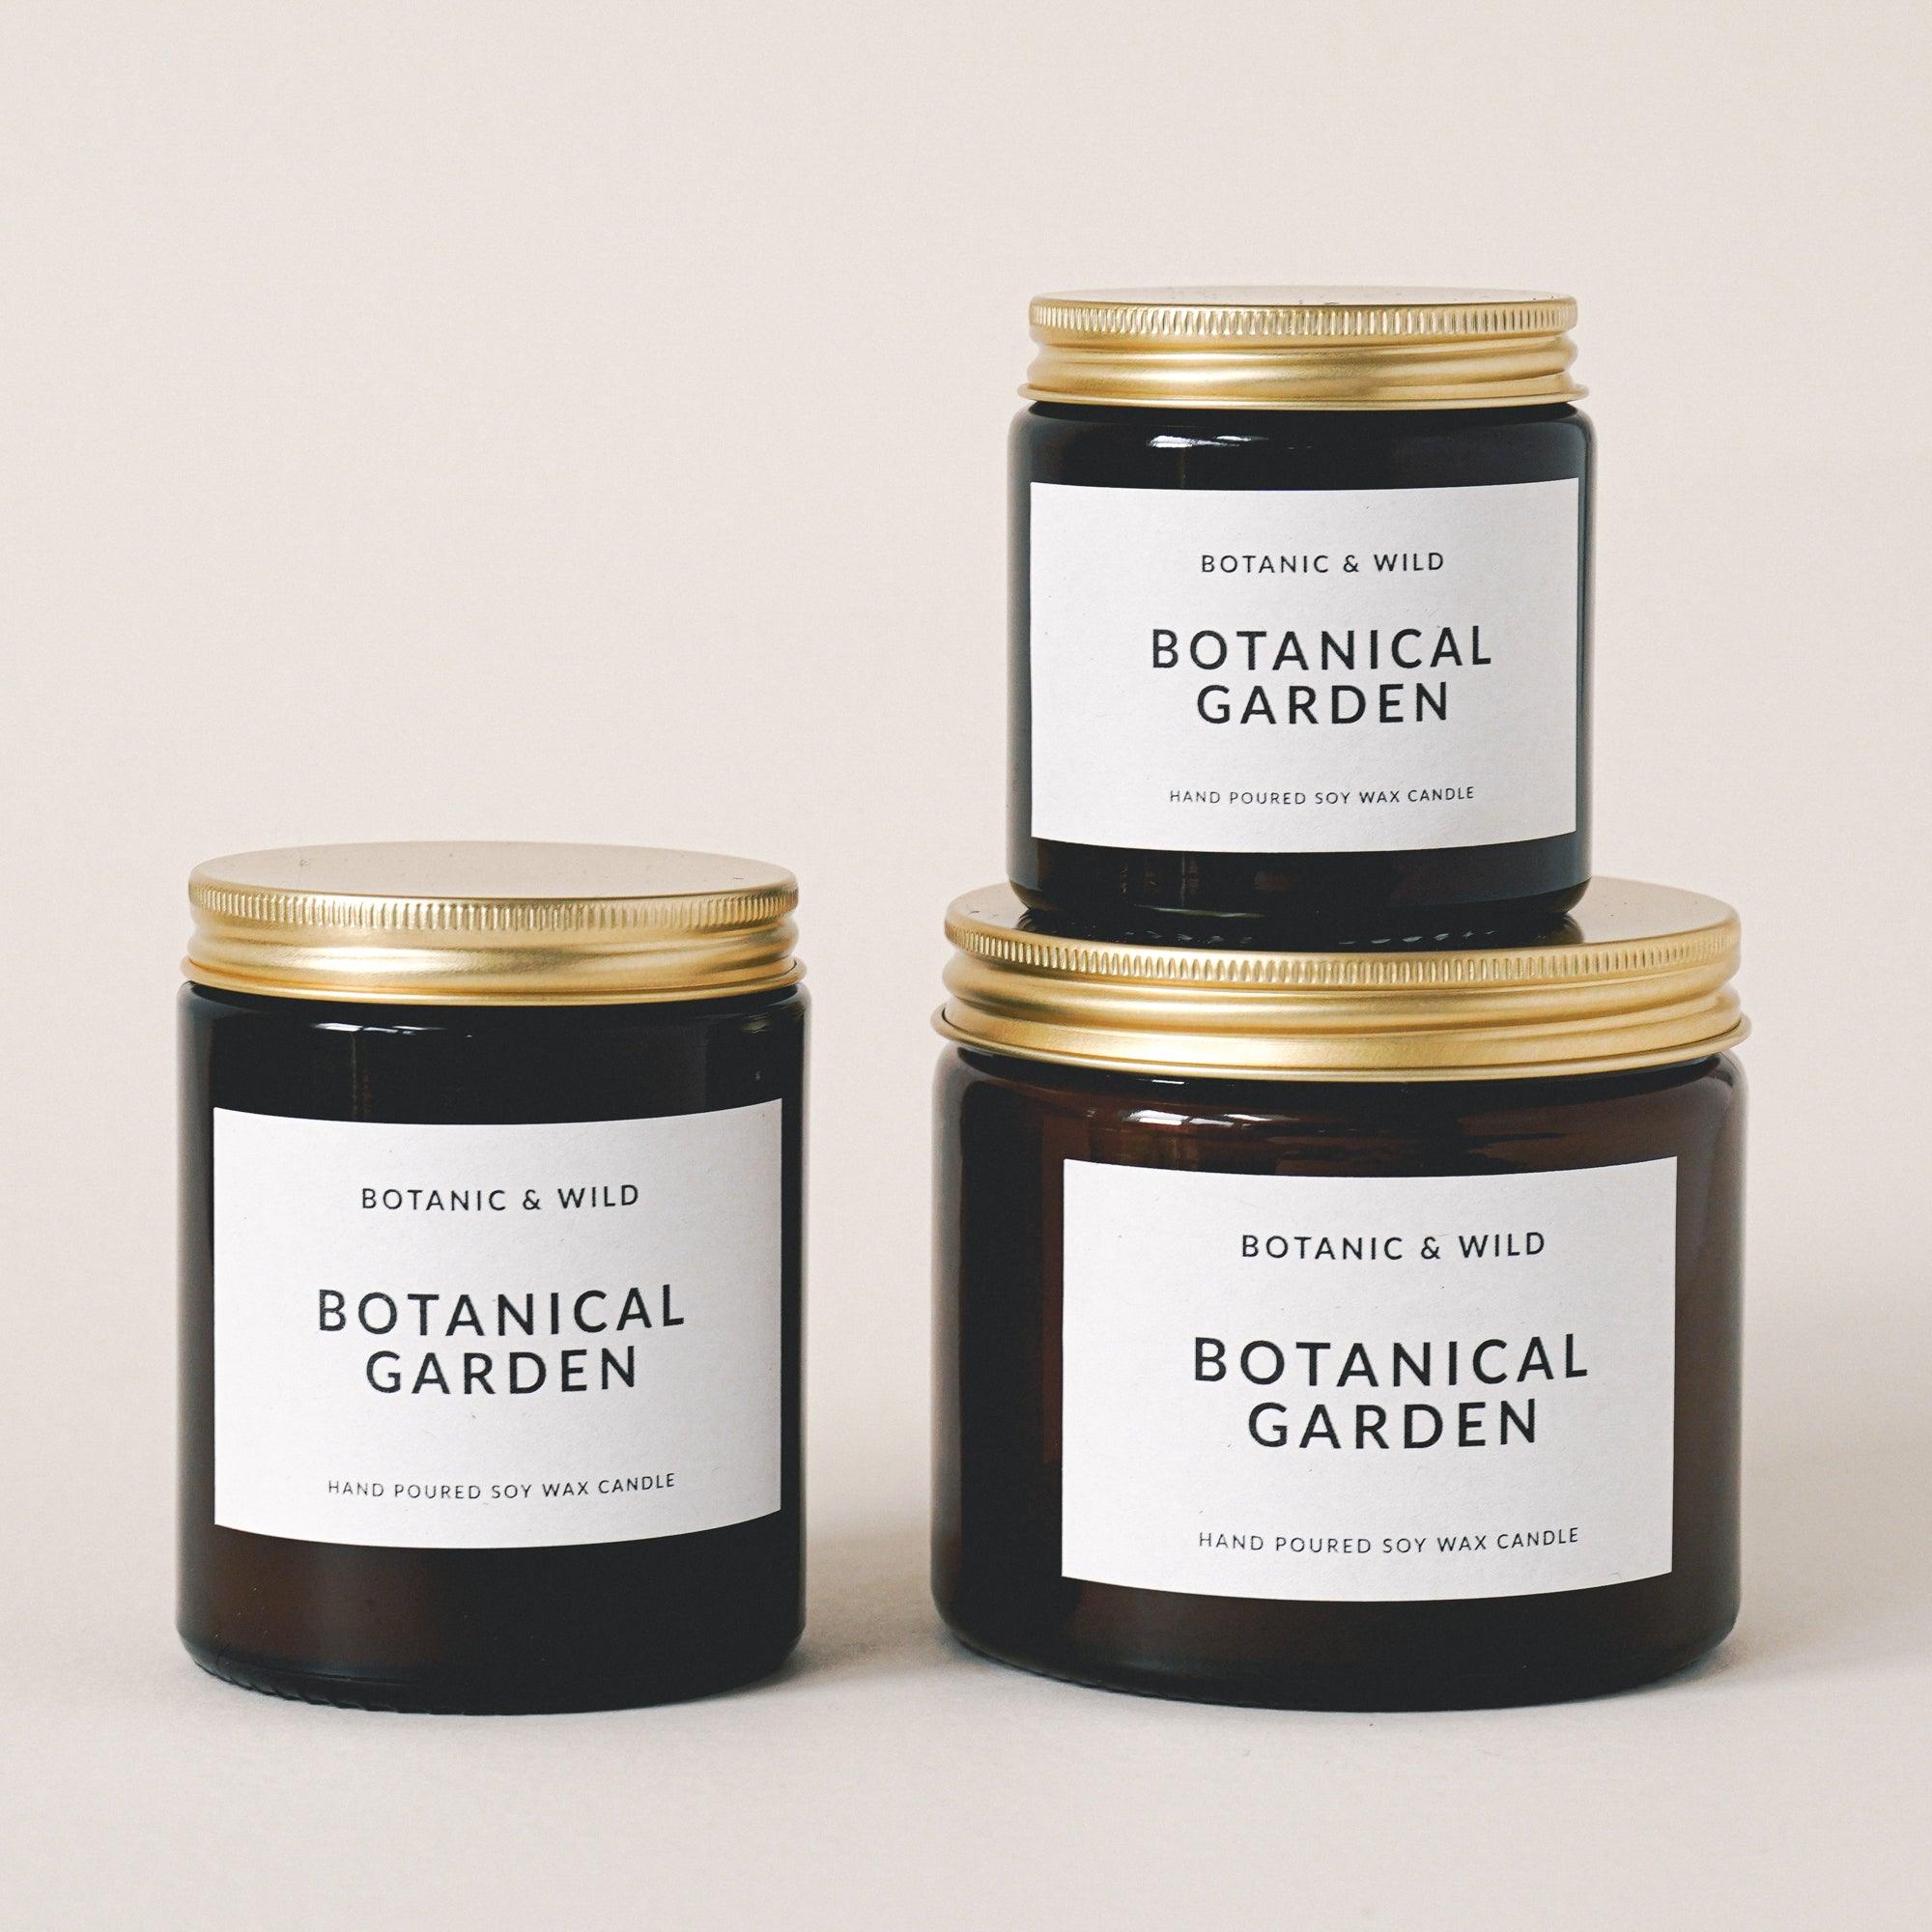 BOTANICAL GARDEN Scented Soy Candles - Botanic & Wild